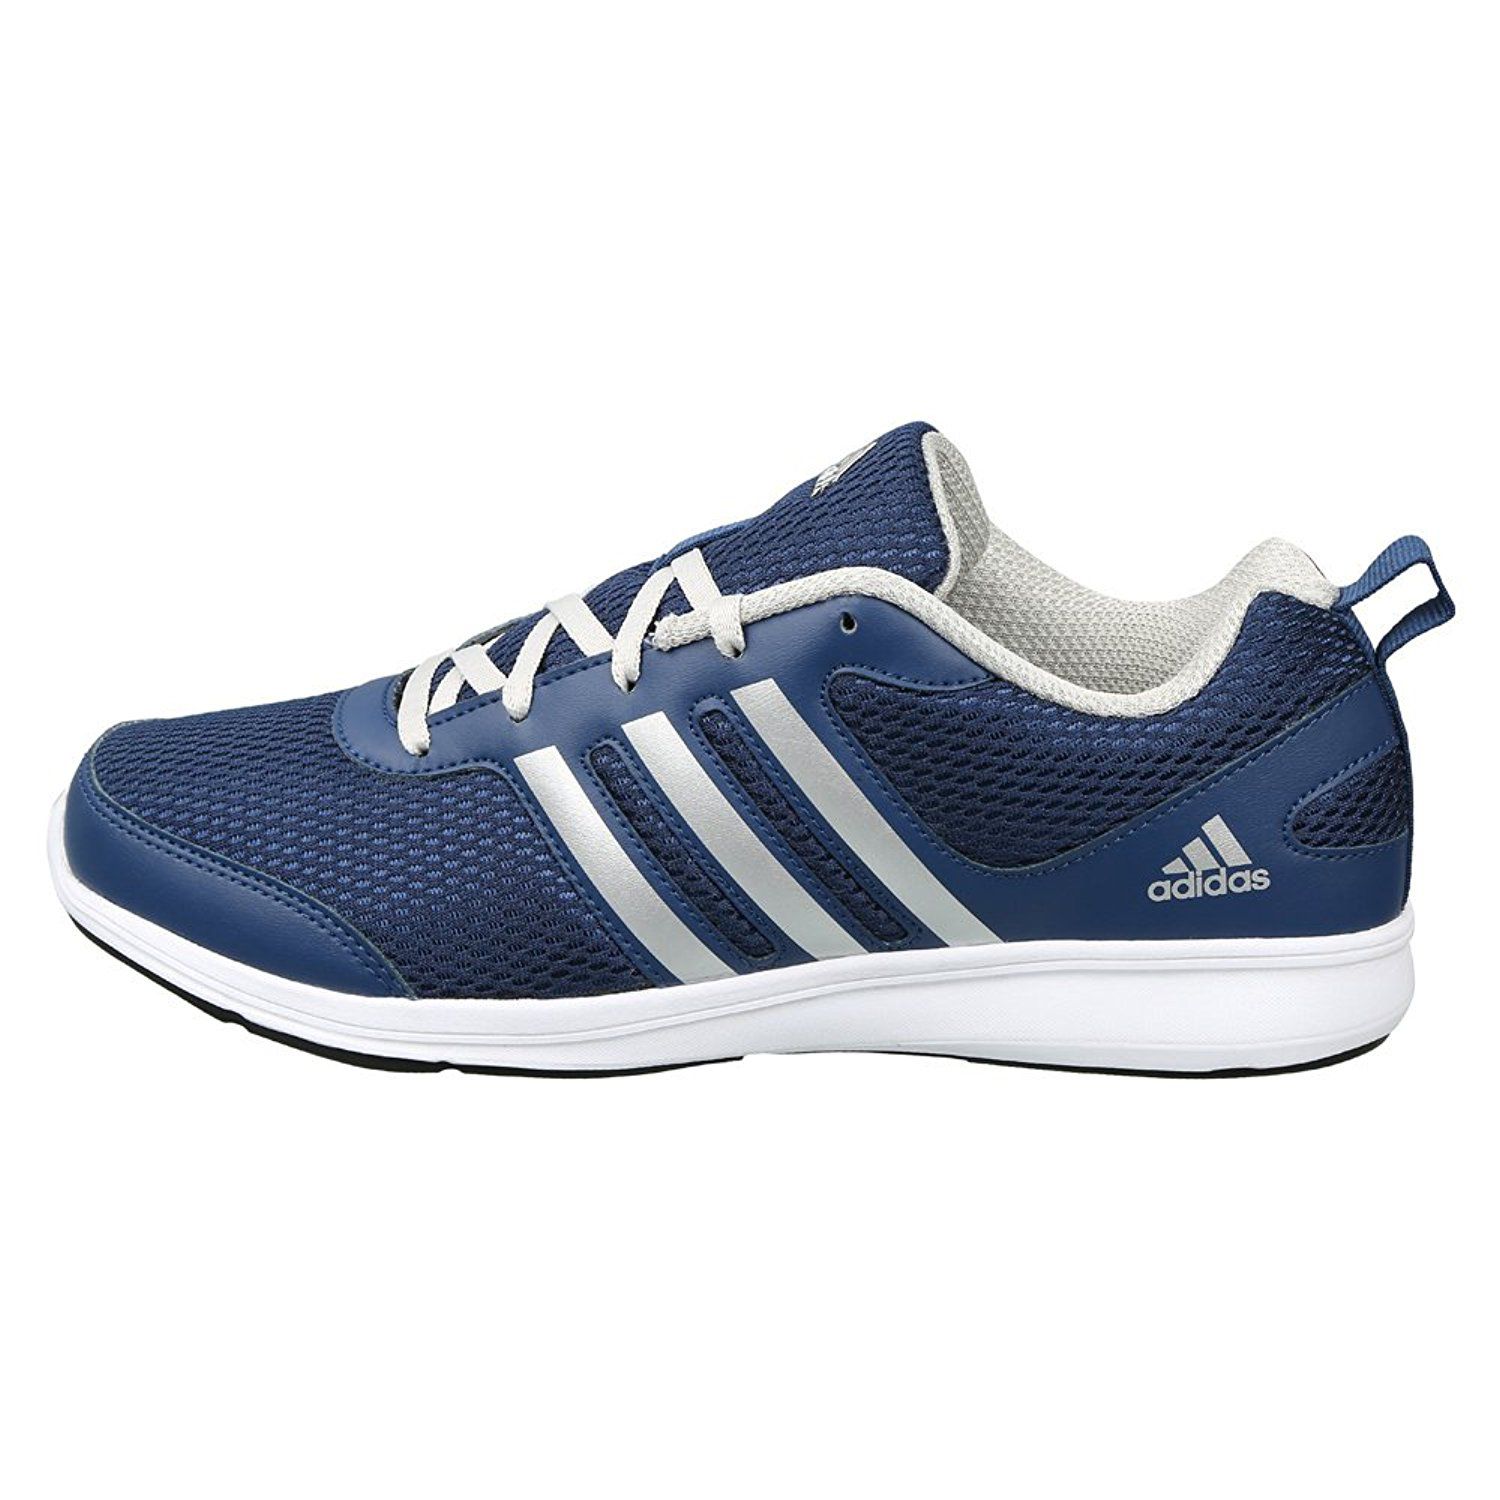 Adidas Yking Blue Running Shoes - Buy Adidas Yking Blue Running Shoes ...